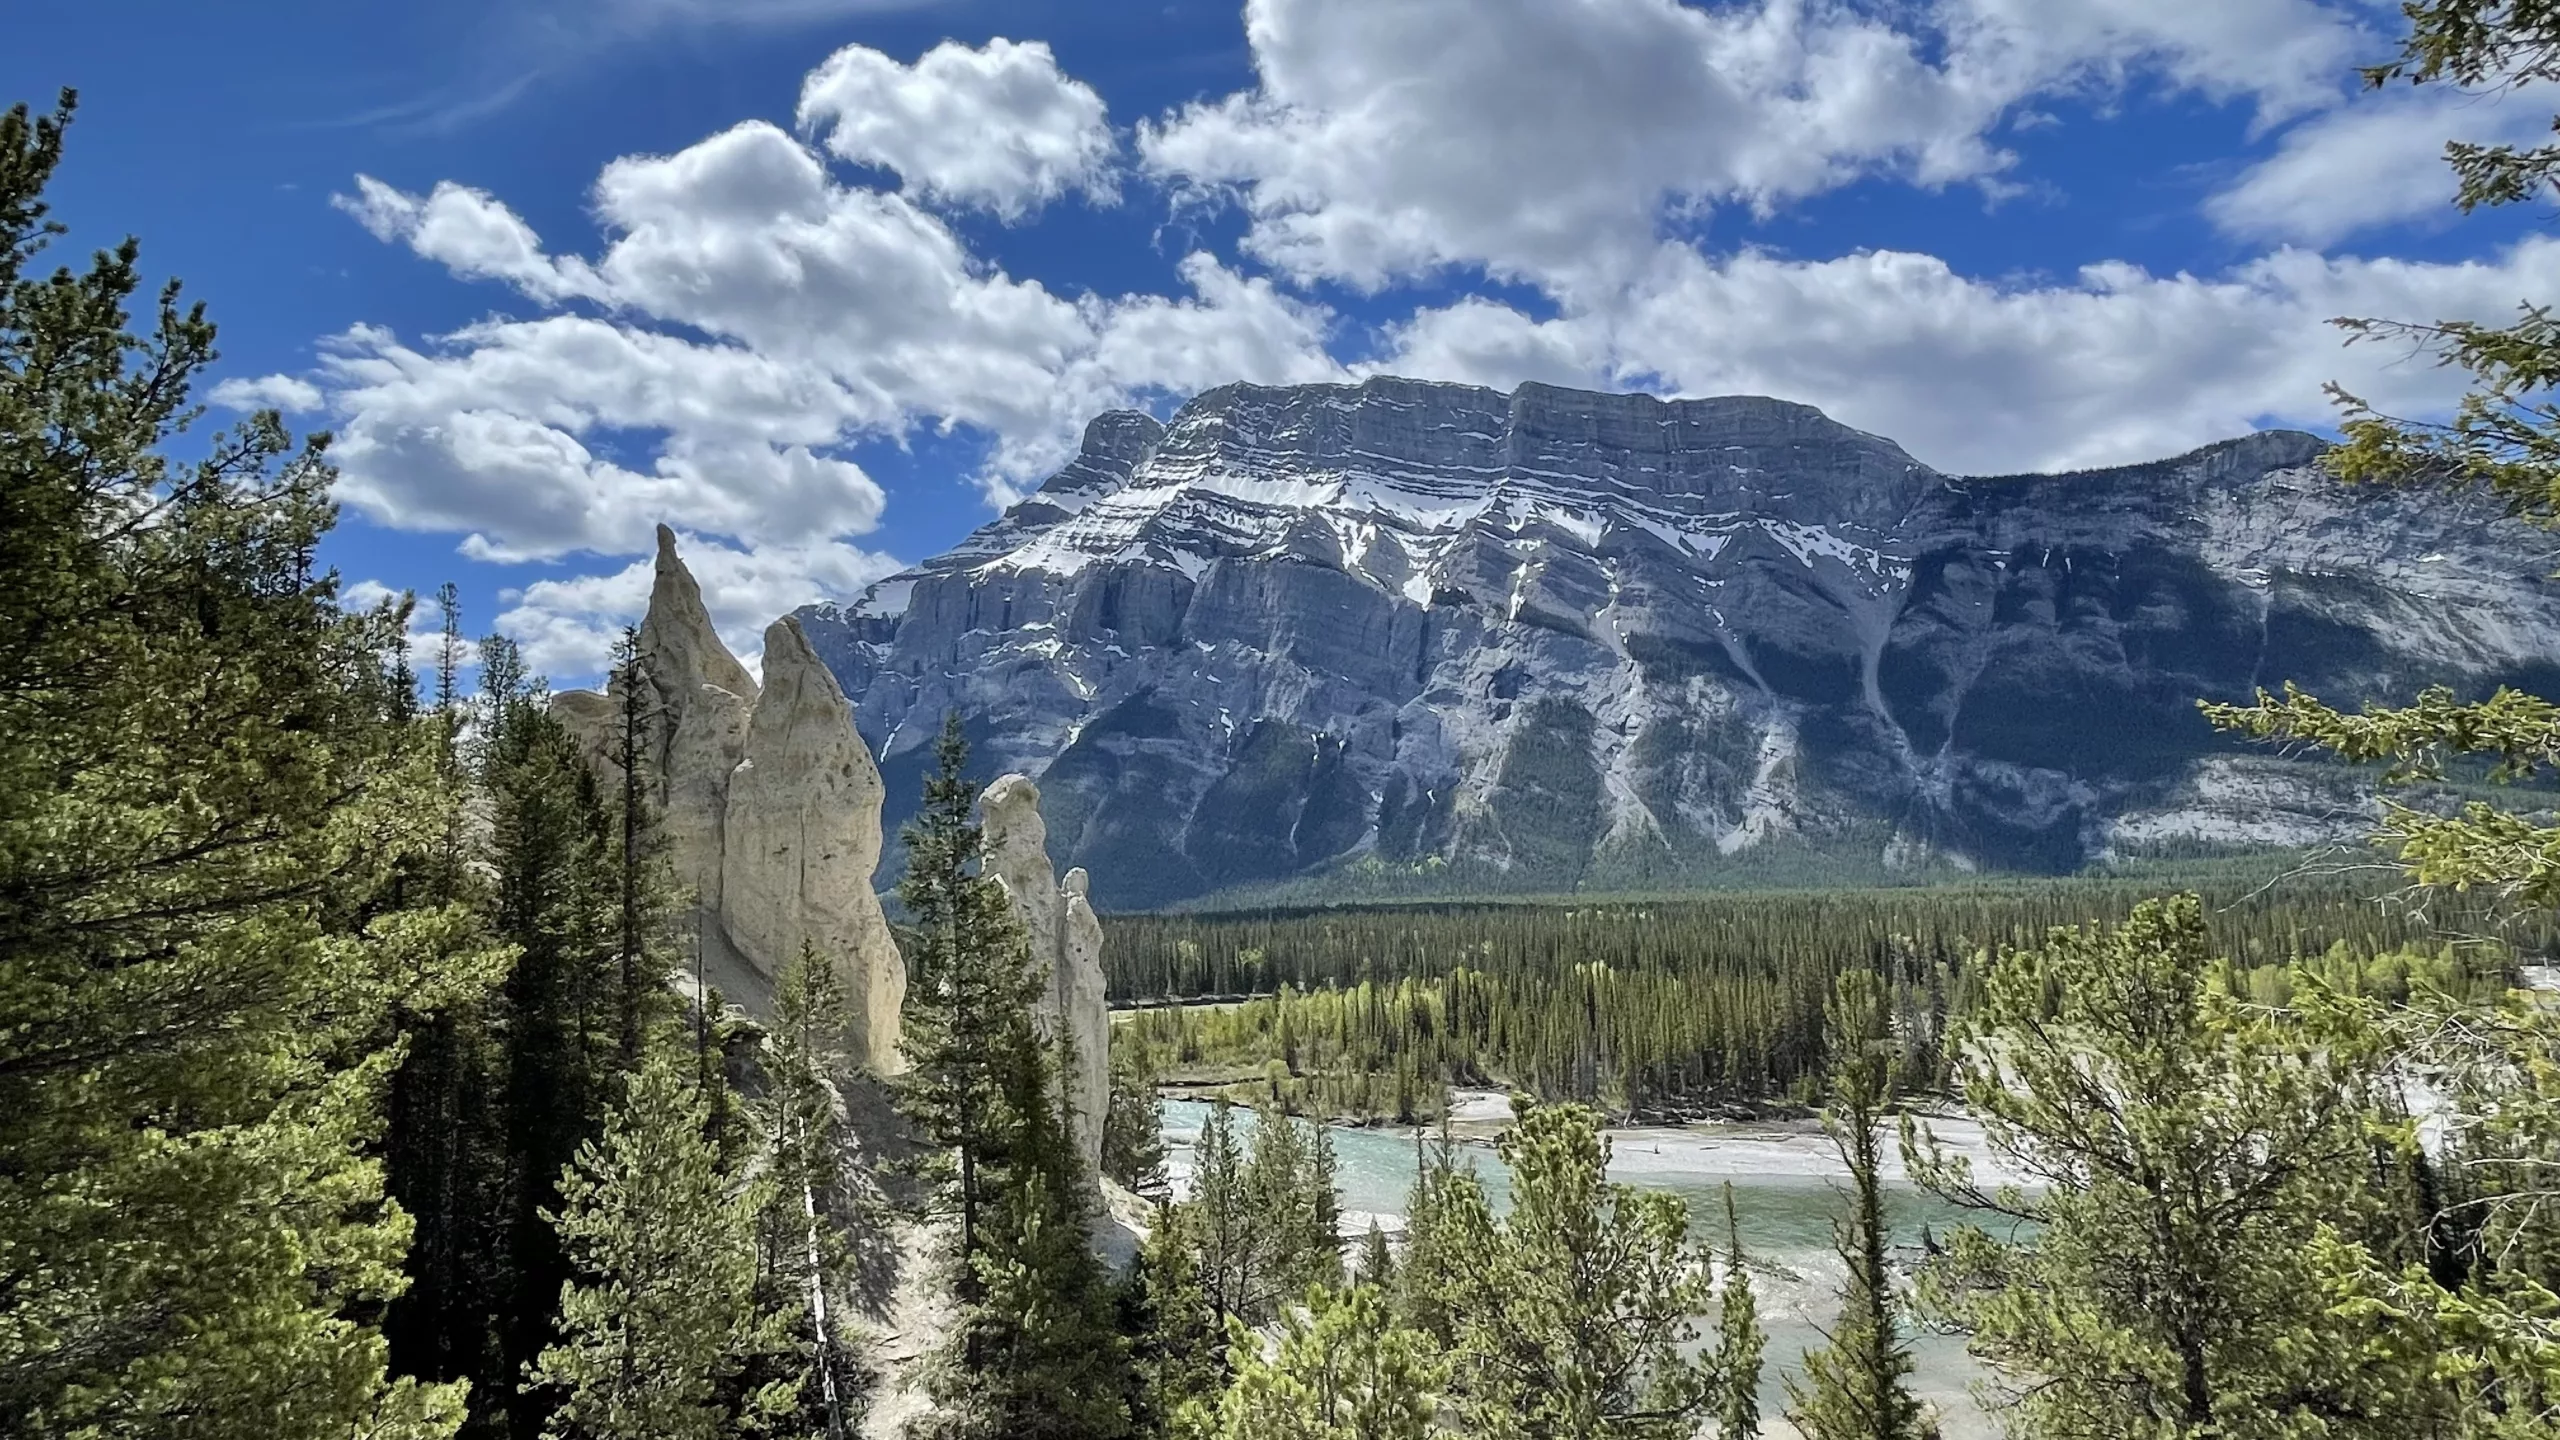 Hoodoos | Cheminées de Fées | Parc National de Banff | Canada | Alberta | Randonnée | Voyage Aventure | Road Trip | Le Monde de Chloé